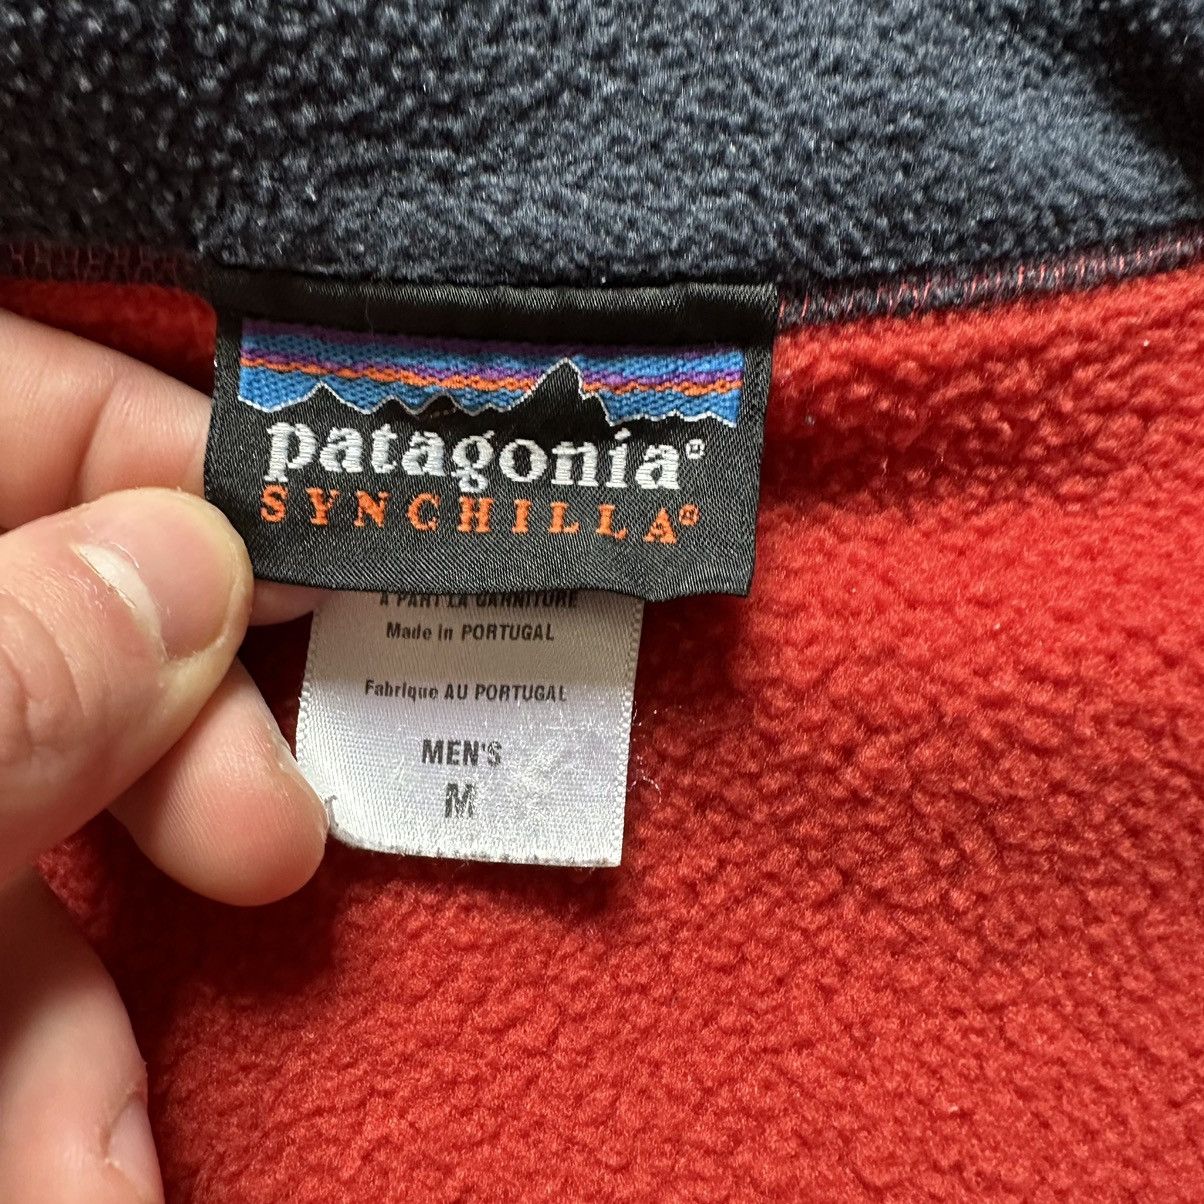 Patagonia Patagonia Synchilla Vest Gilet Mens Size:M Size US M / EU 48-50 / 2 - 8 Preview